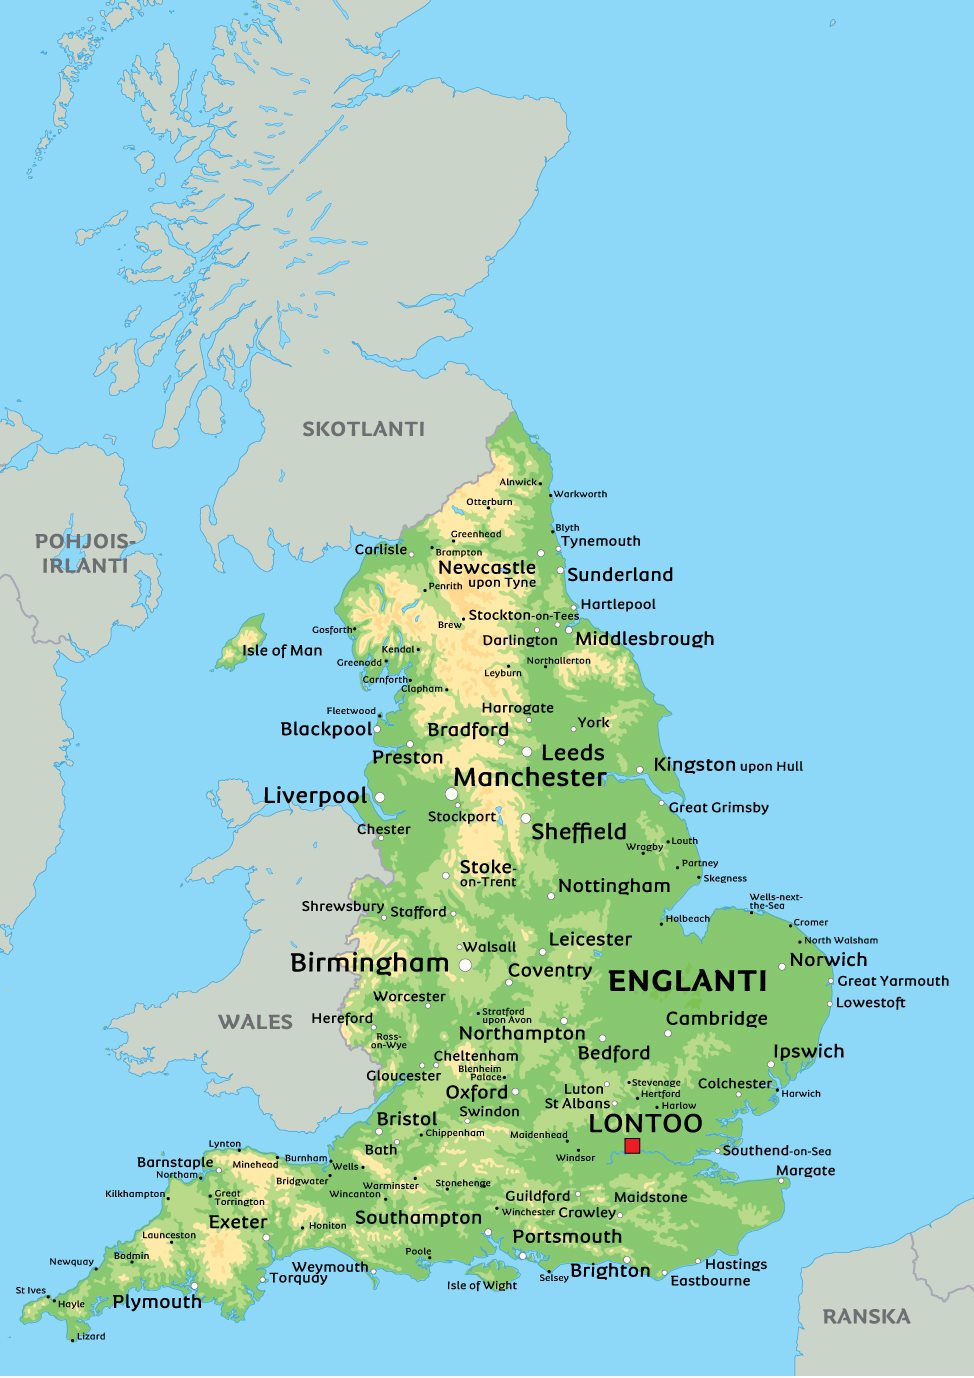 Kartta Englannista: kts. esim. kaupunkien sijainti kartasta